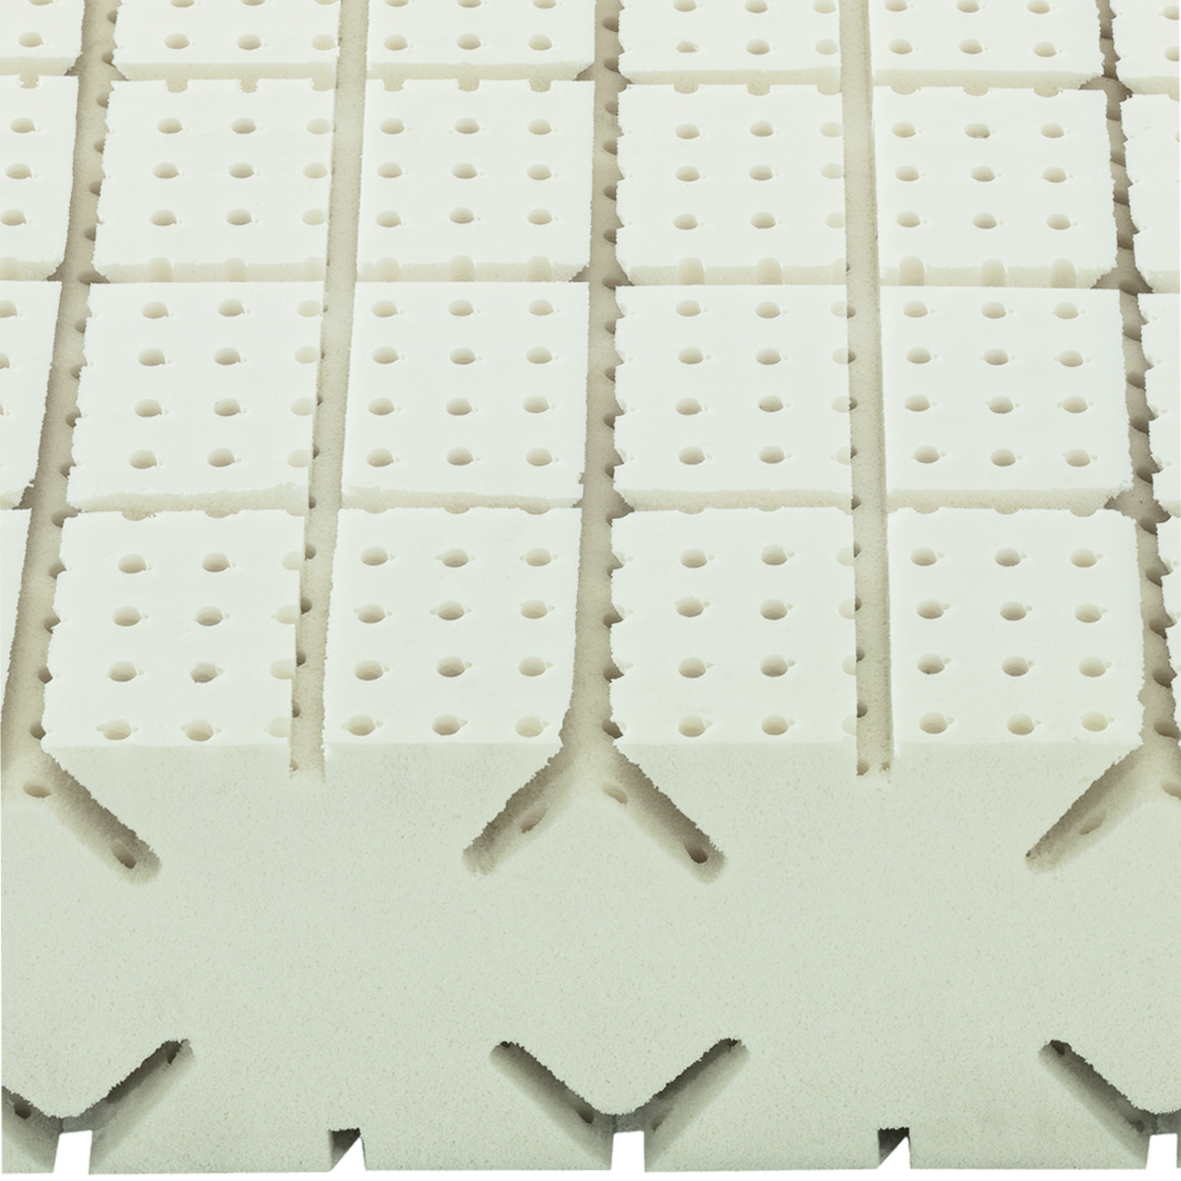 cross section & surface of female mattress core 